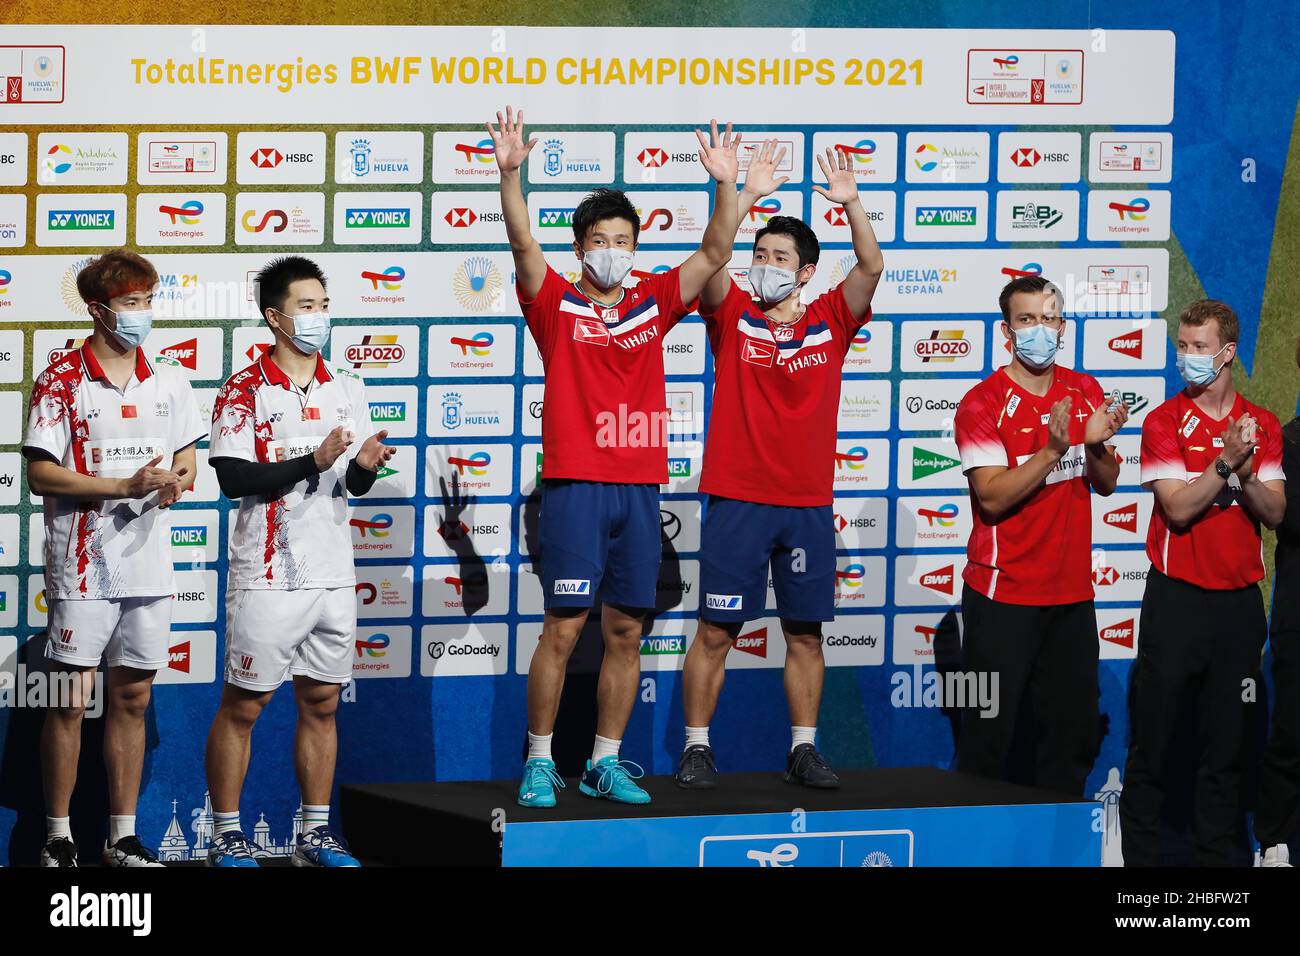 Bwf world 2021 totalenergies championships badminton spain